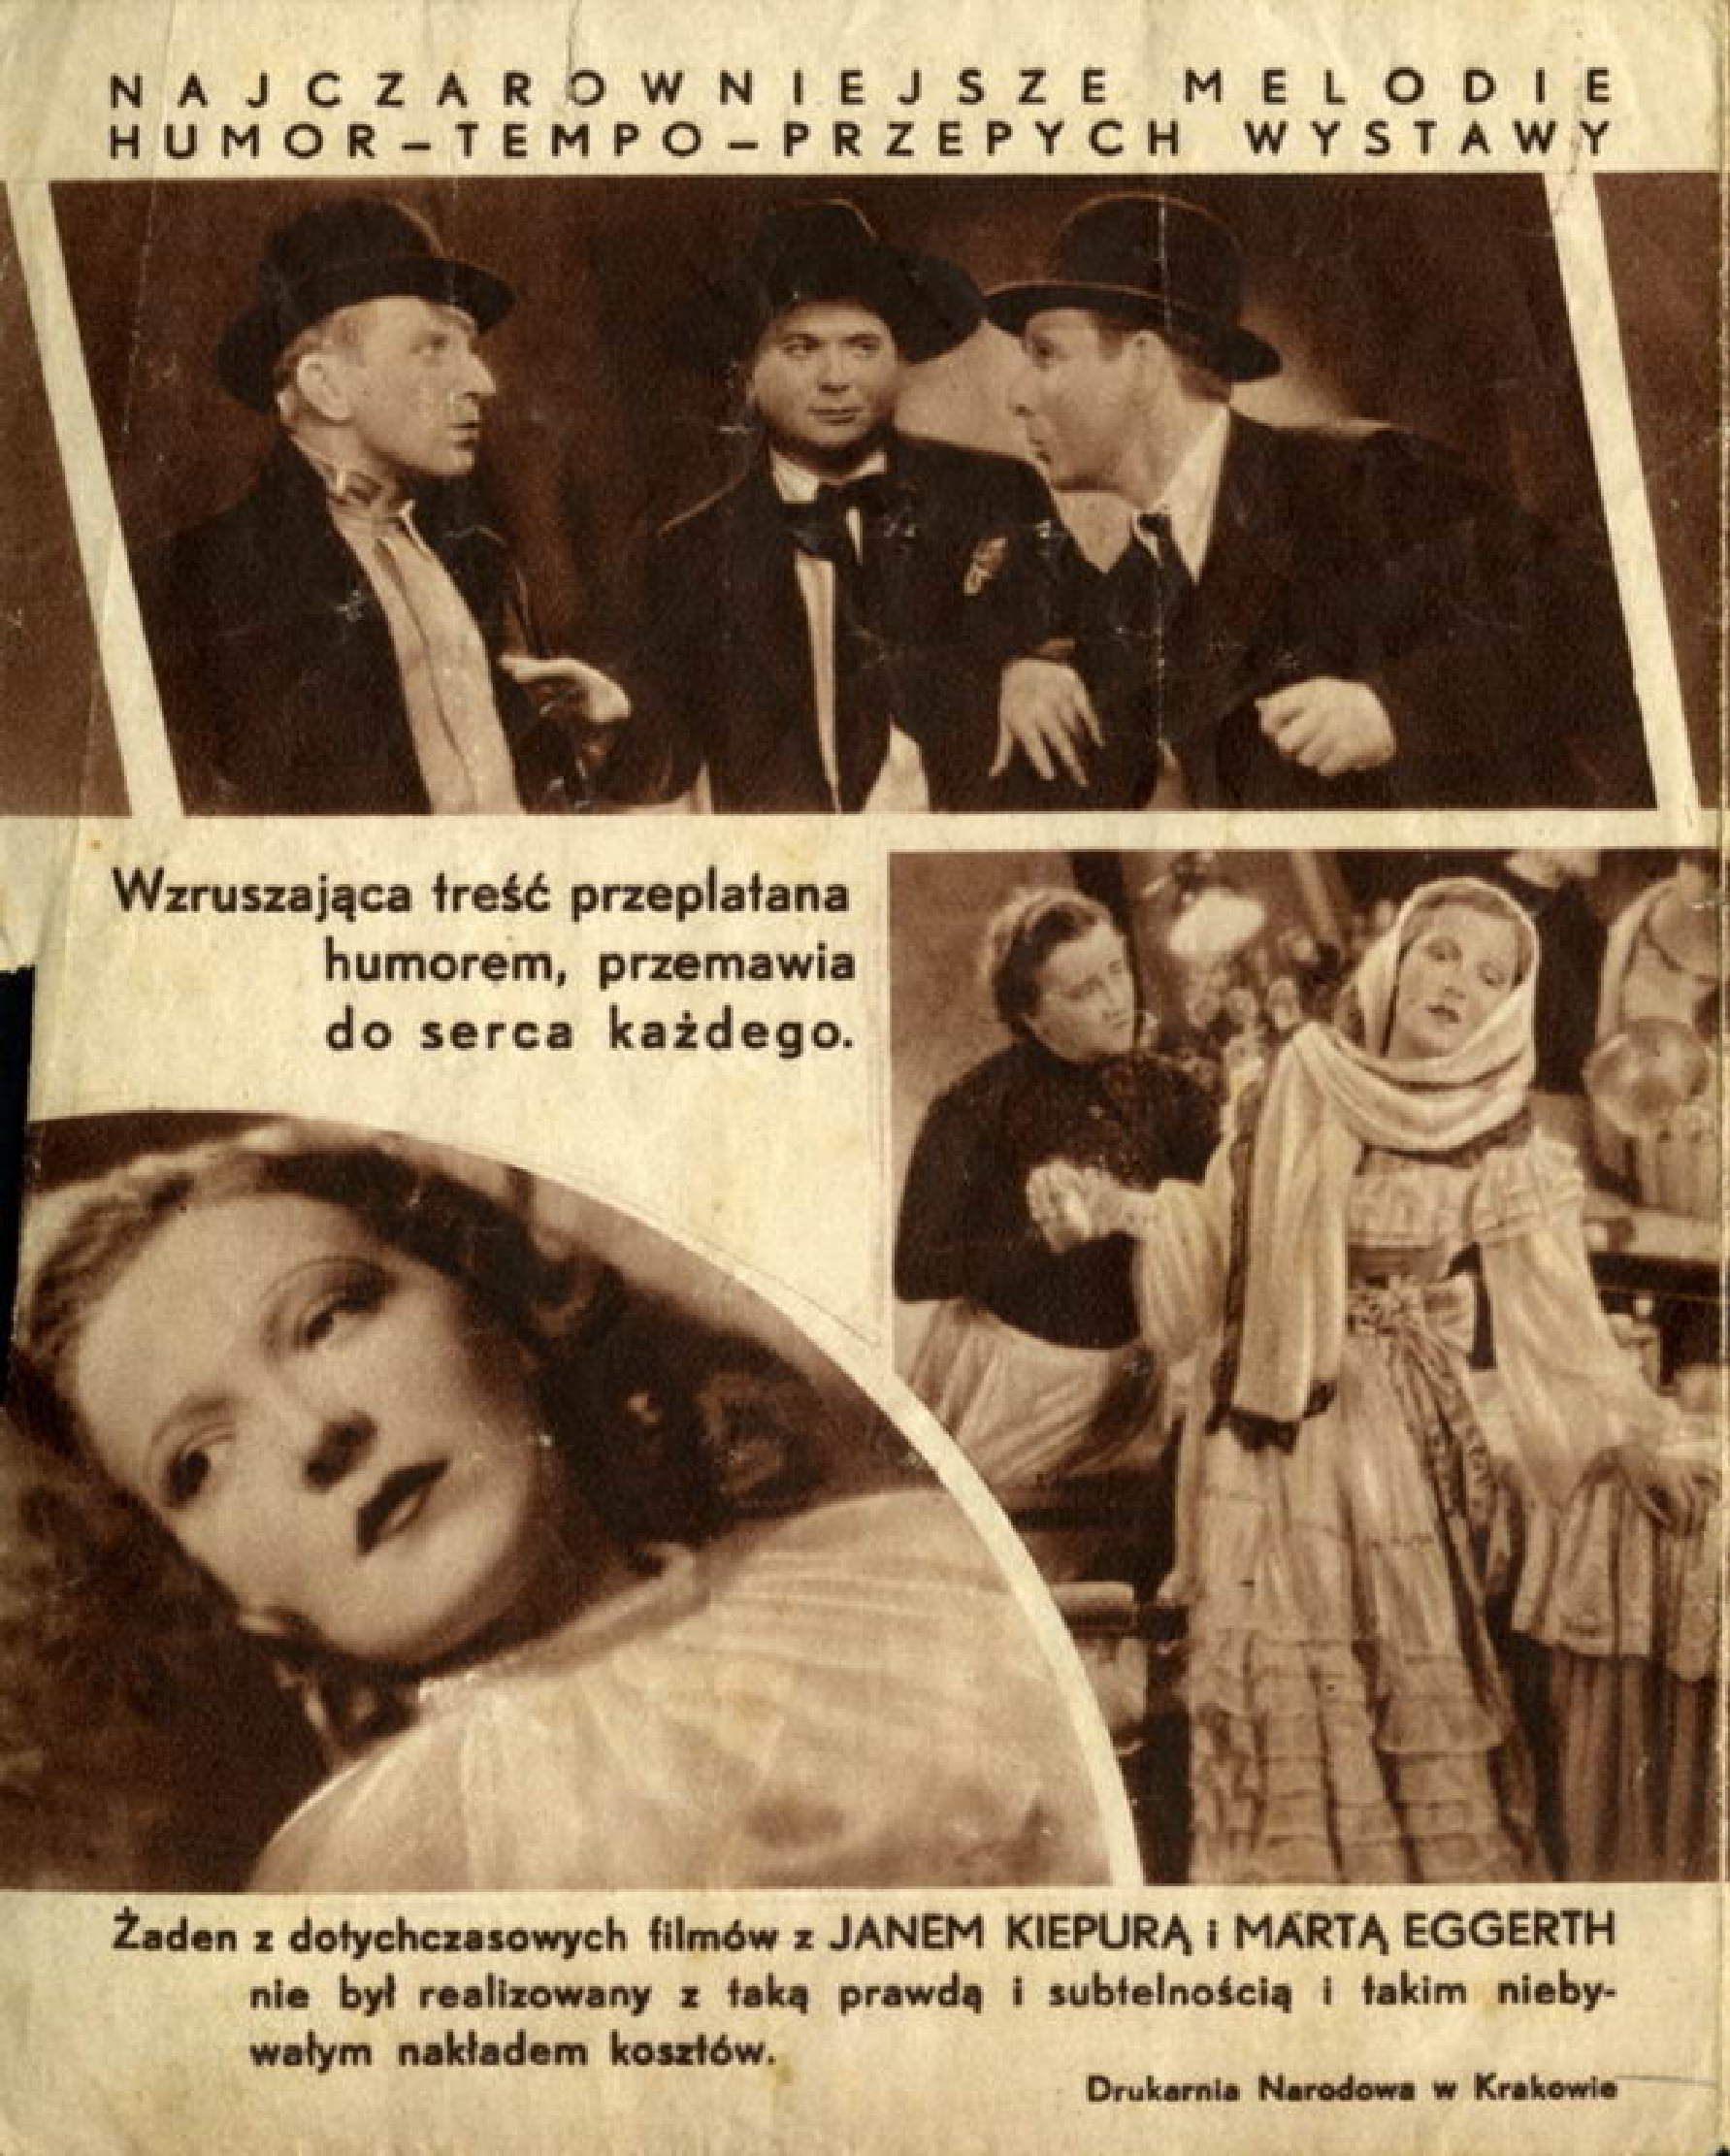 Prospekt reklamowy filmu pt. "Czar Cyganerii", 1937, Marta Eggerth, Jan Kiepura, mbc.cyfrowemazowsze.pl